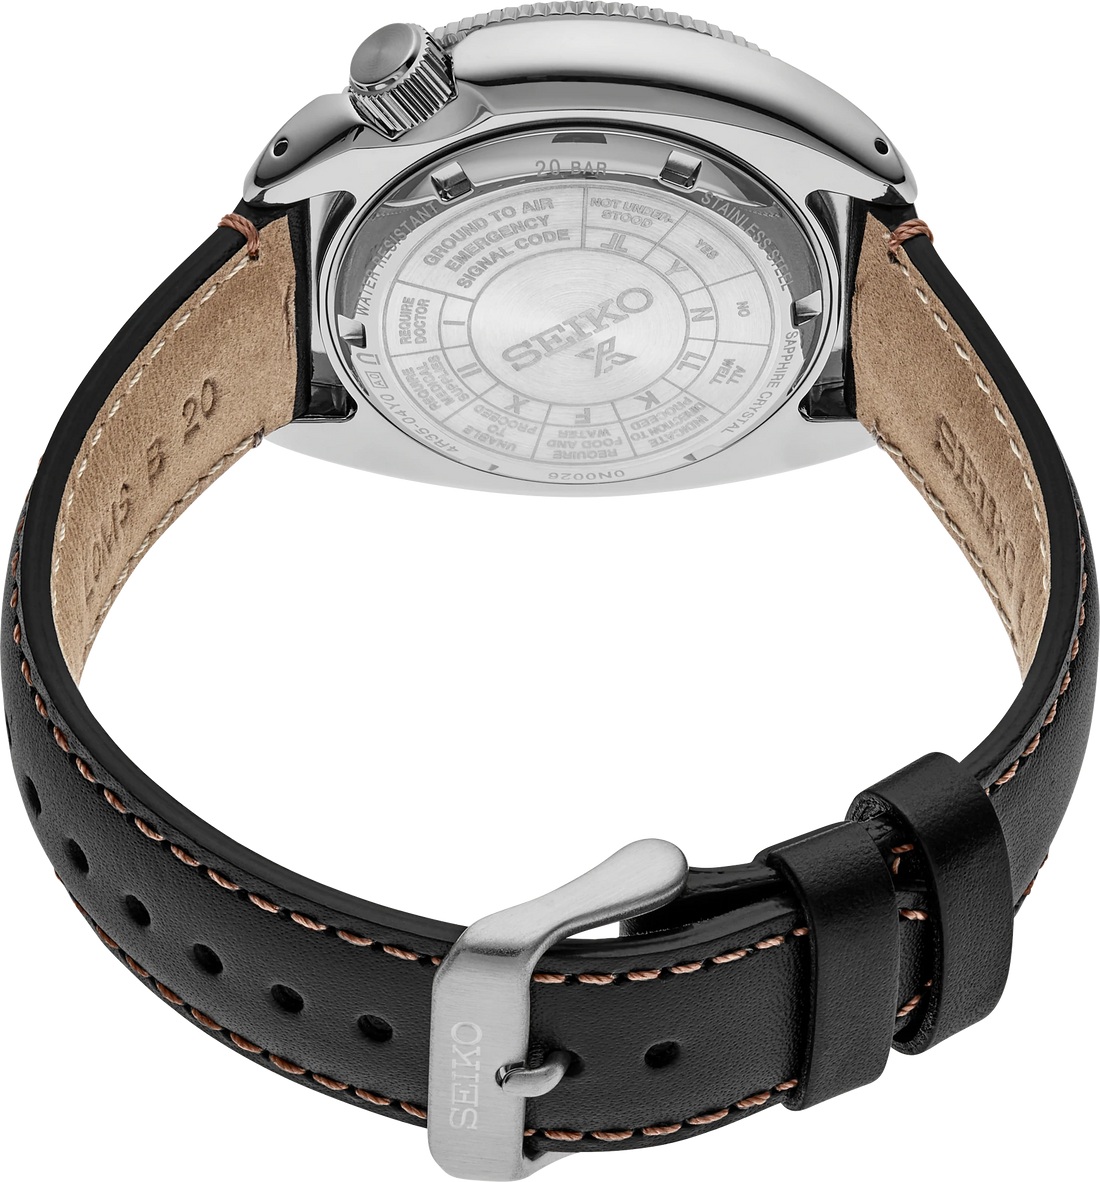 Seiko Prospex SRPG17 "Land" Black Dial Leather Strap Watch - Skeie's Jewelers